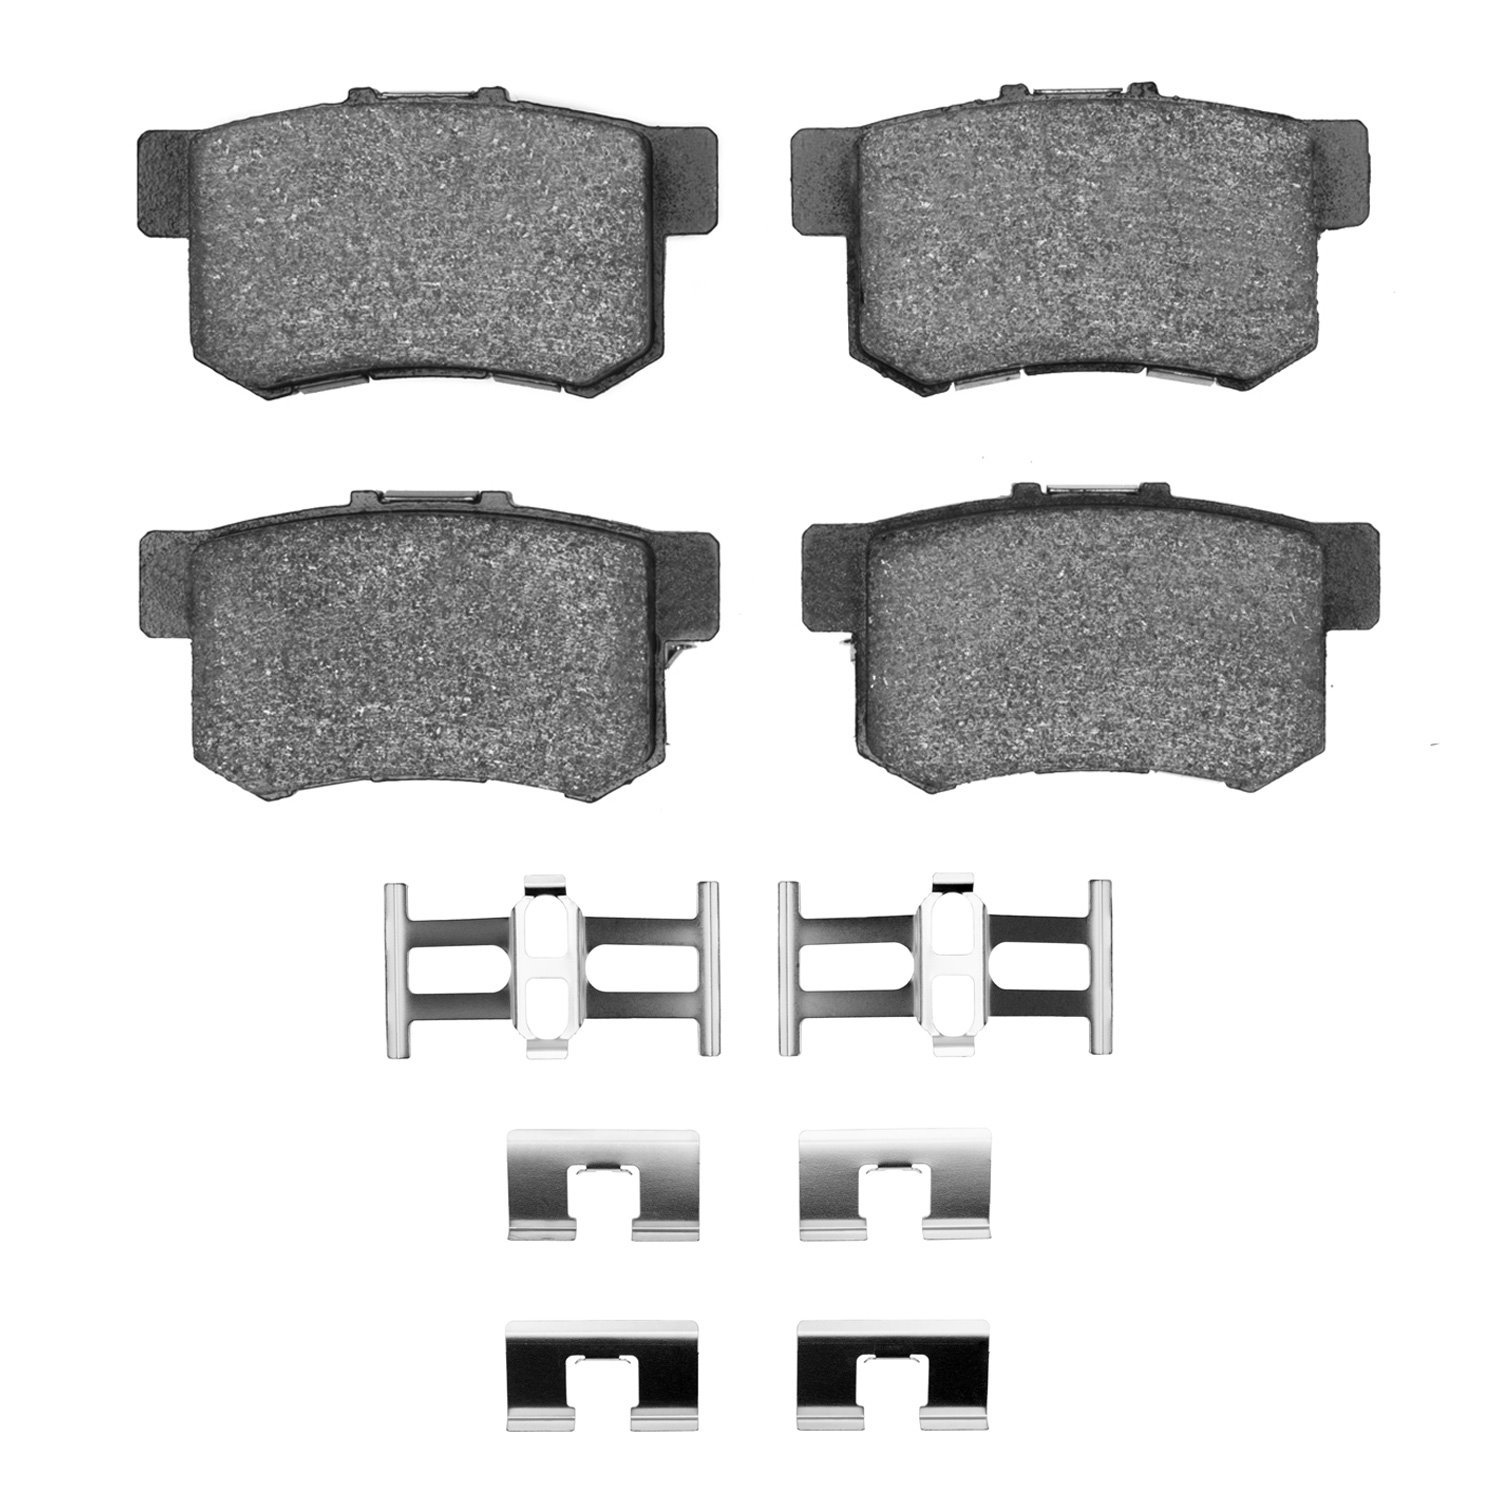 1115-0537-01 Active Performance Brake Pads & Hardware Kit, Fits Select Multiple Makes/Models, Position: Rear